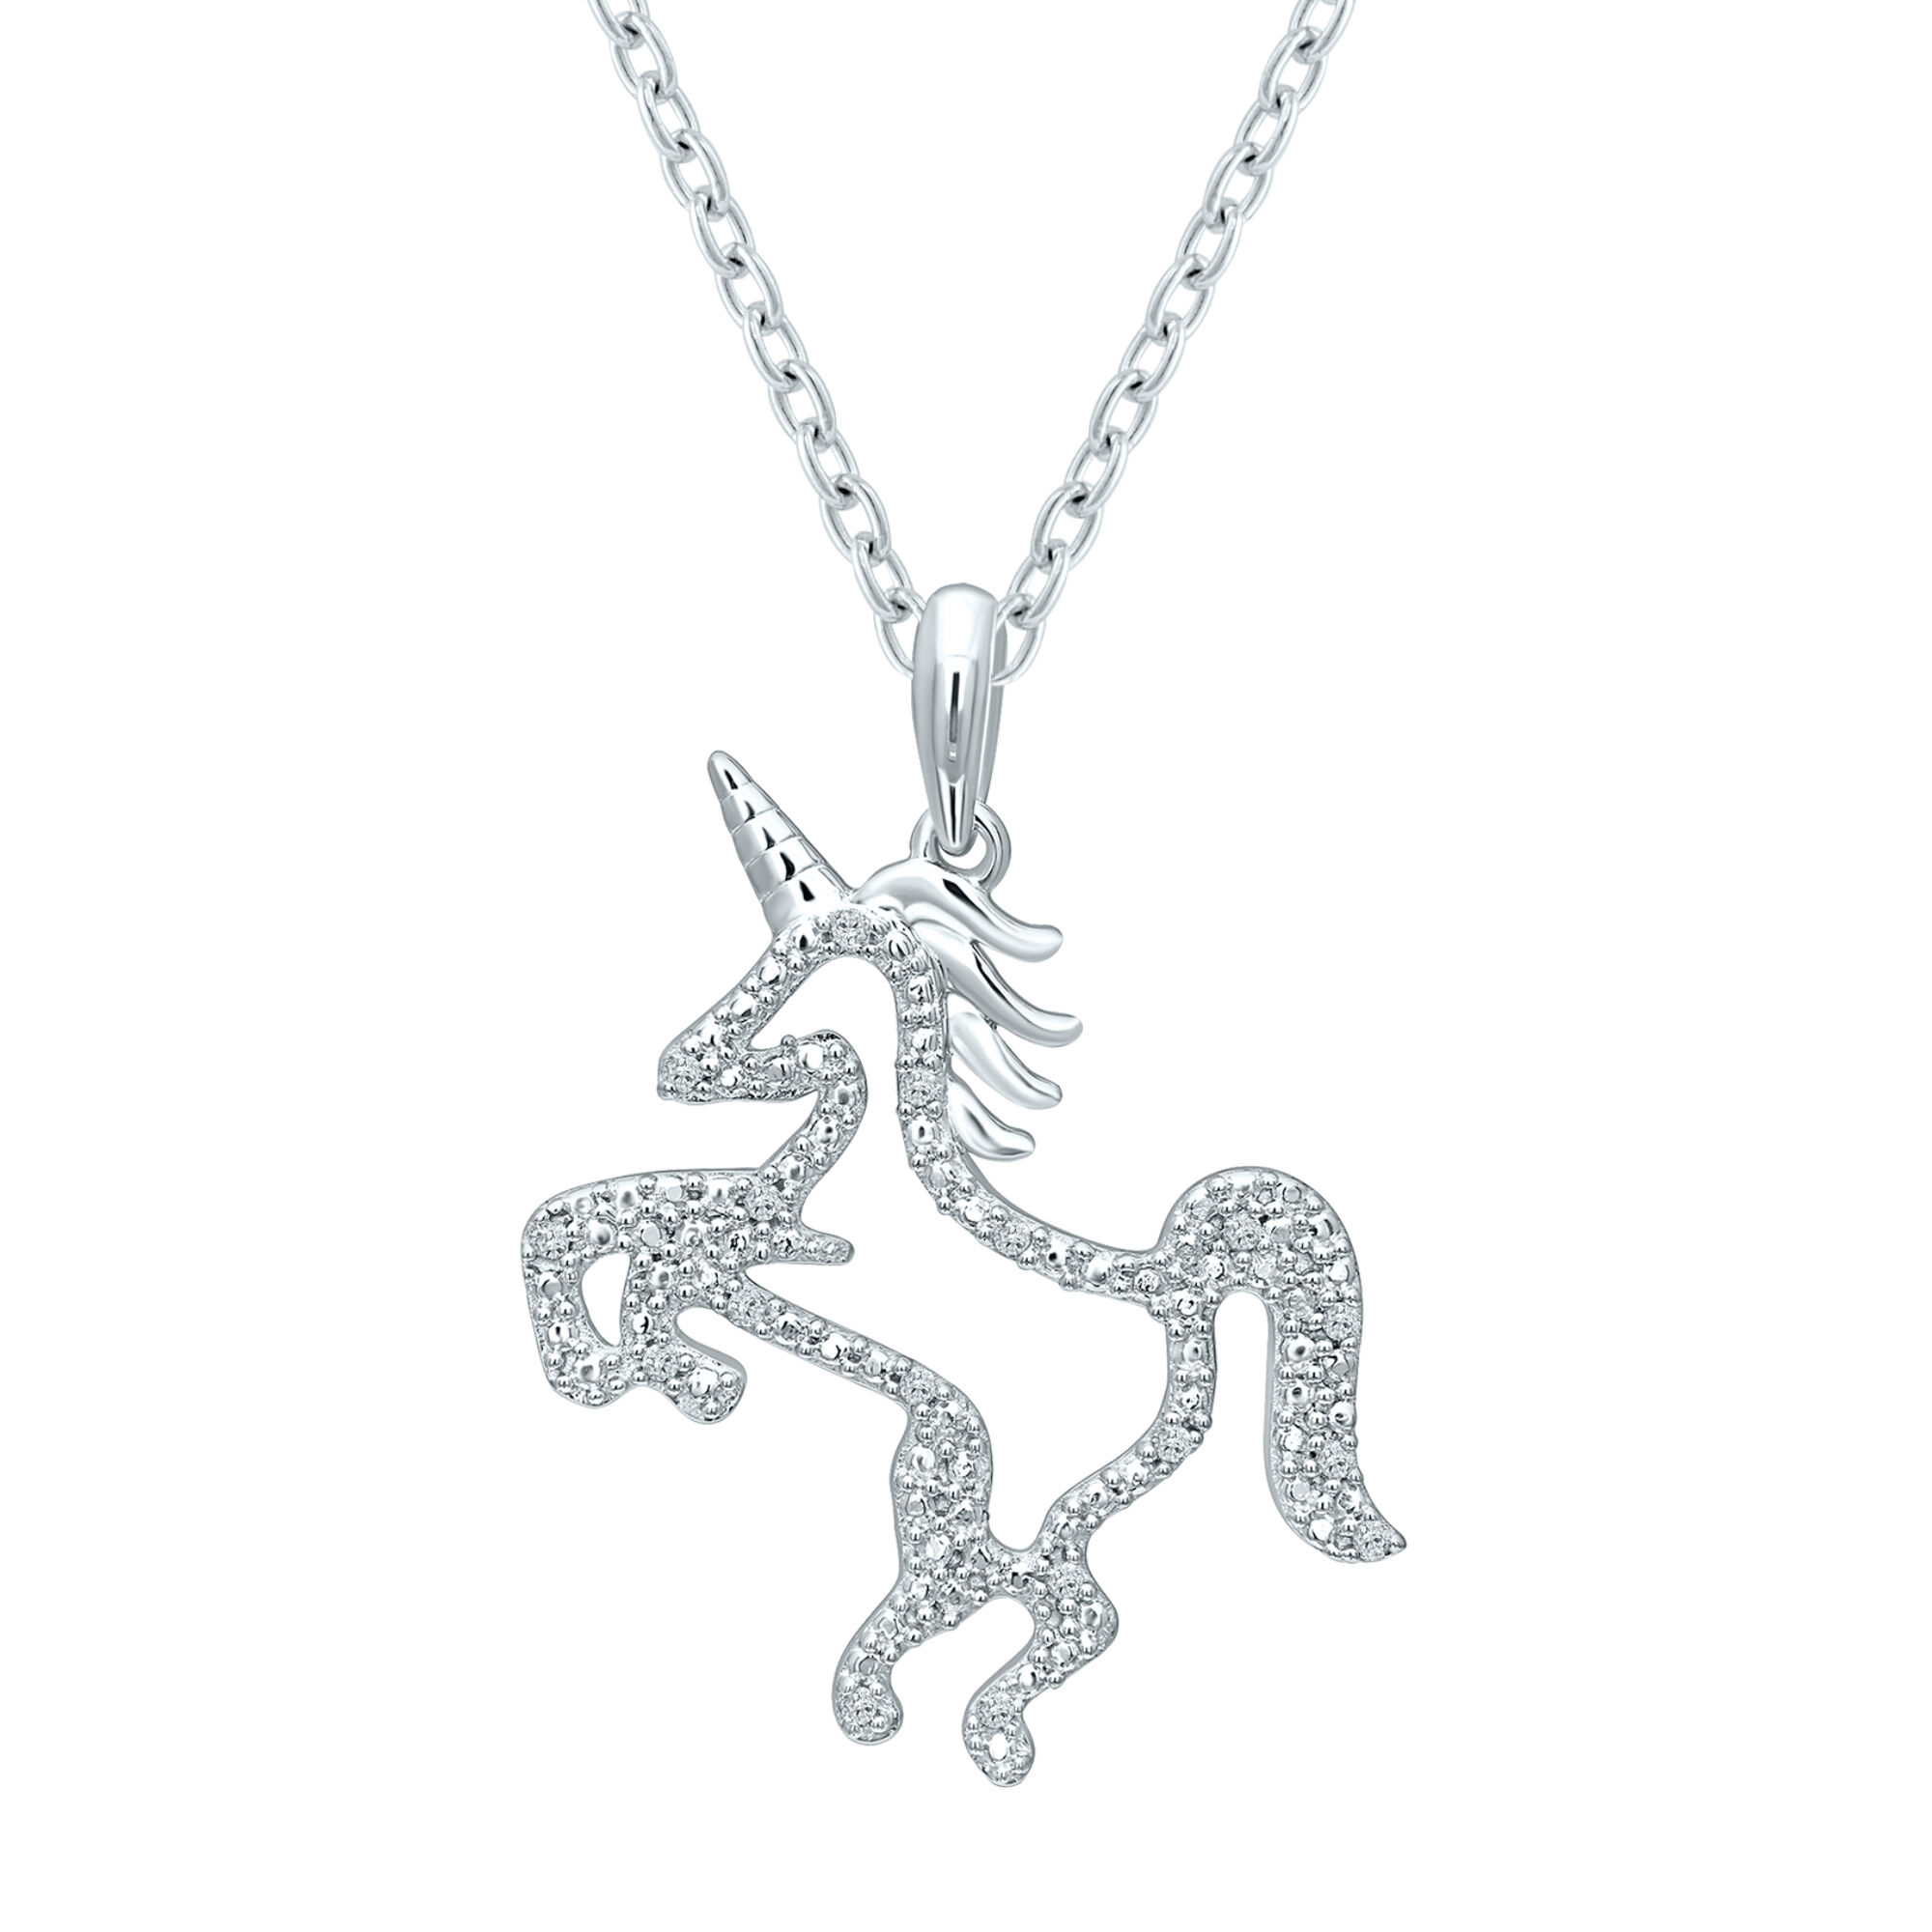 Gold and Gold Tone Unicorn Necklace | A unicorn